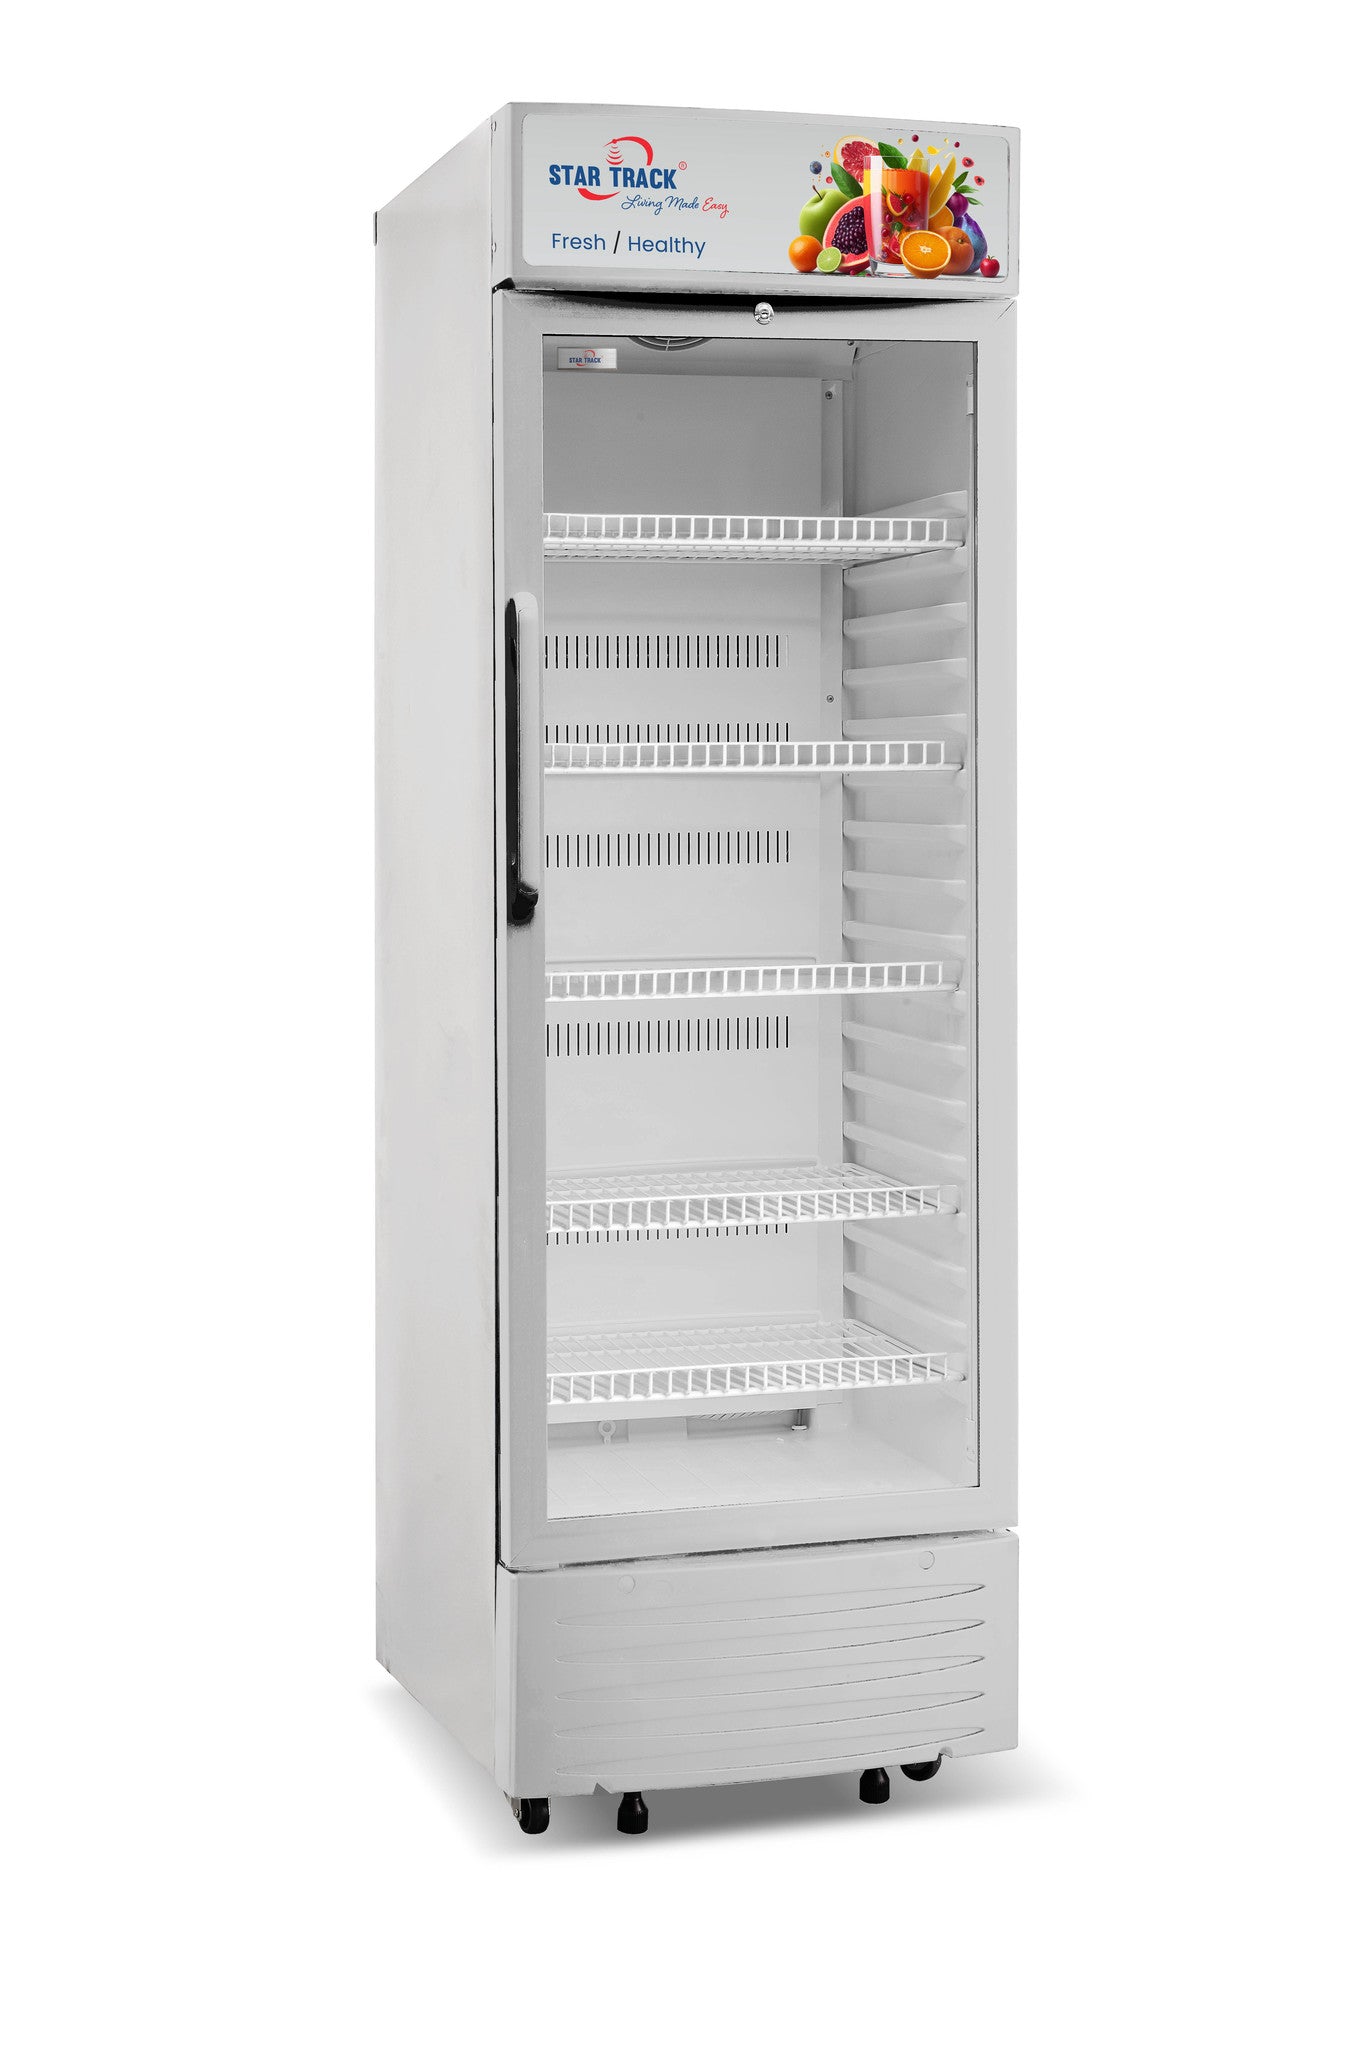 Star Track Freestanding Show Case Chiller Freezer 350L, Smart Storage, Temperature Control Automatic Defrost Function